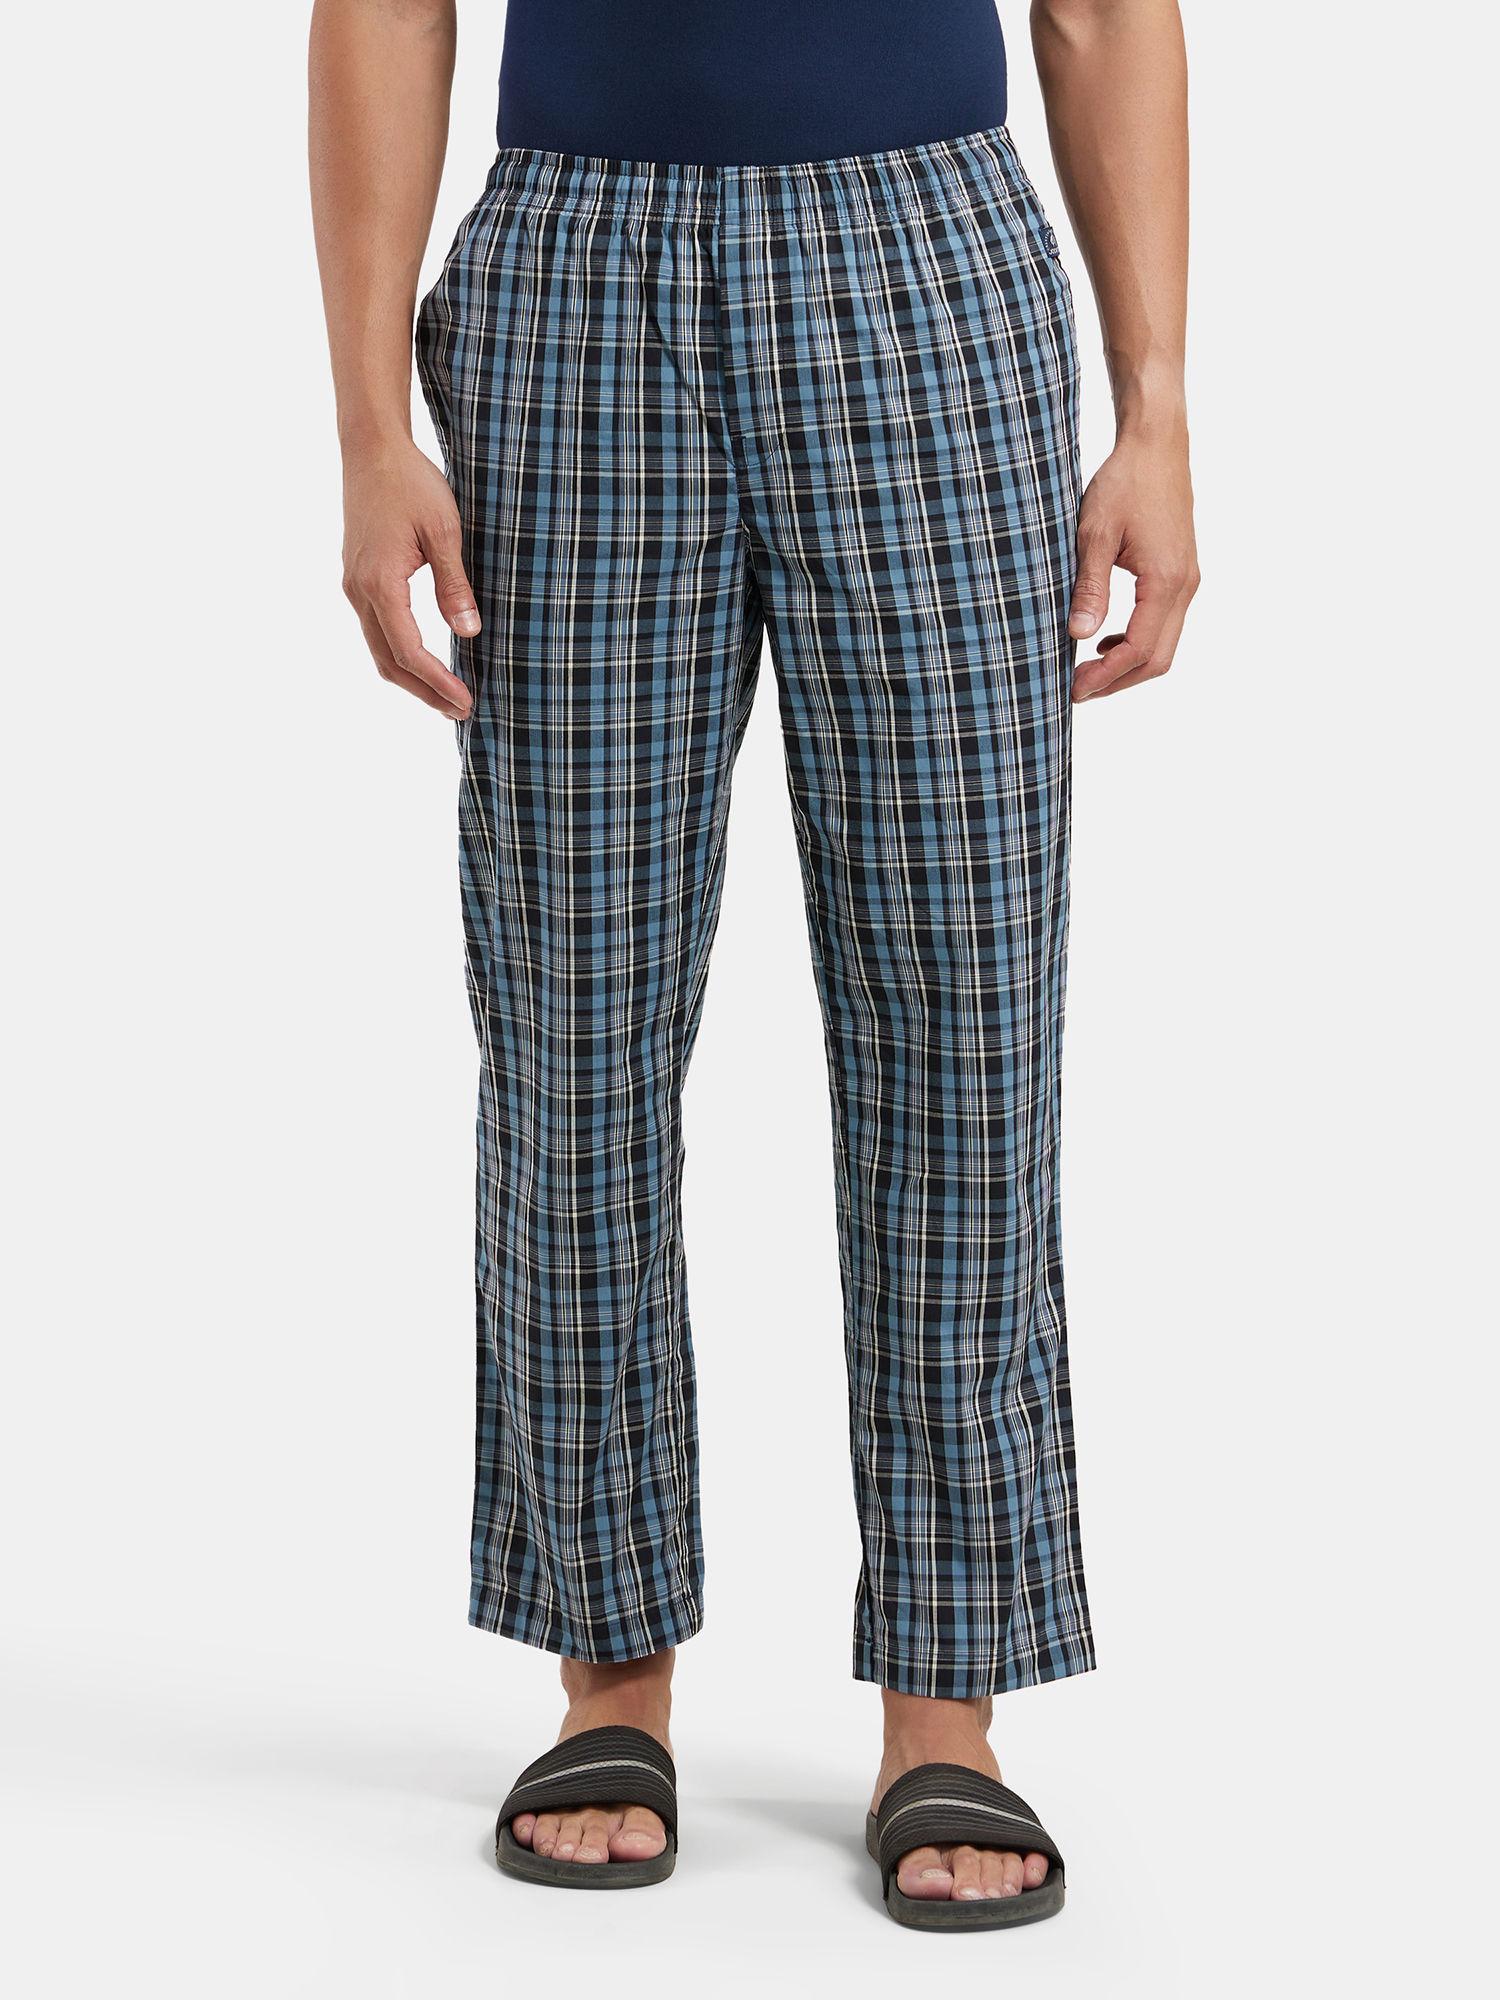 9009 mens super combed cotton satin regular fit checkered pyjama-multi